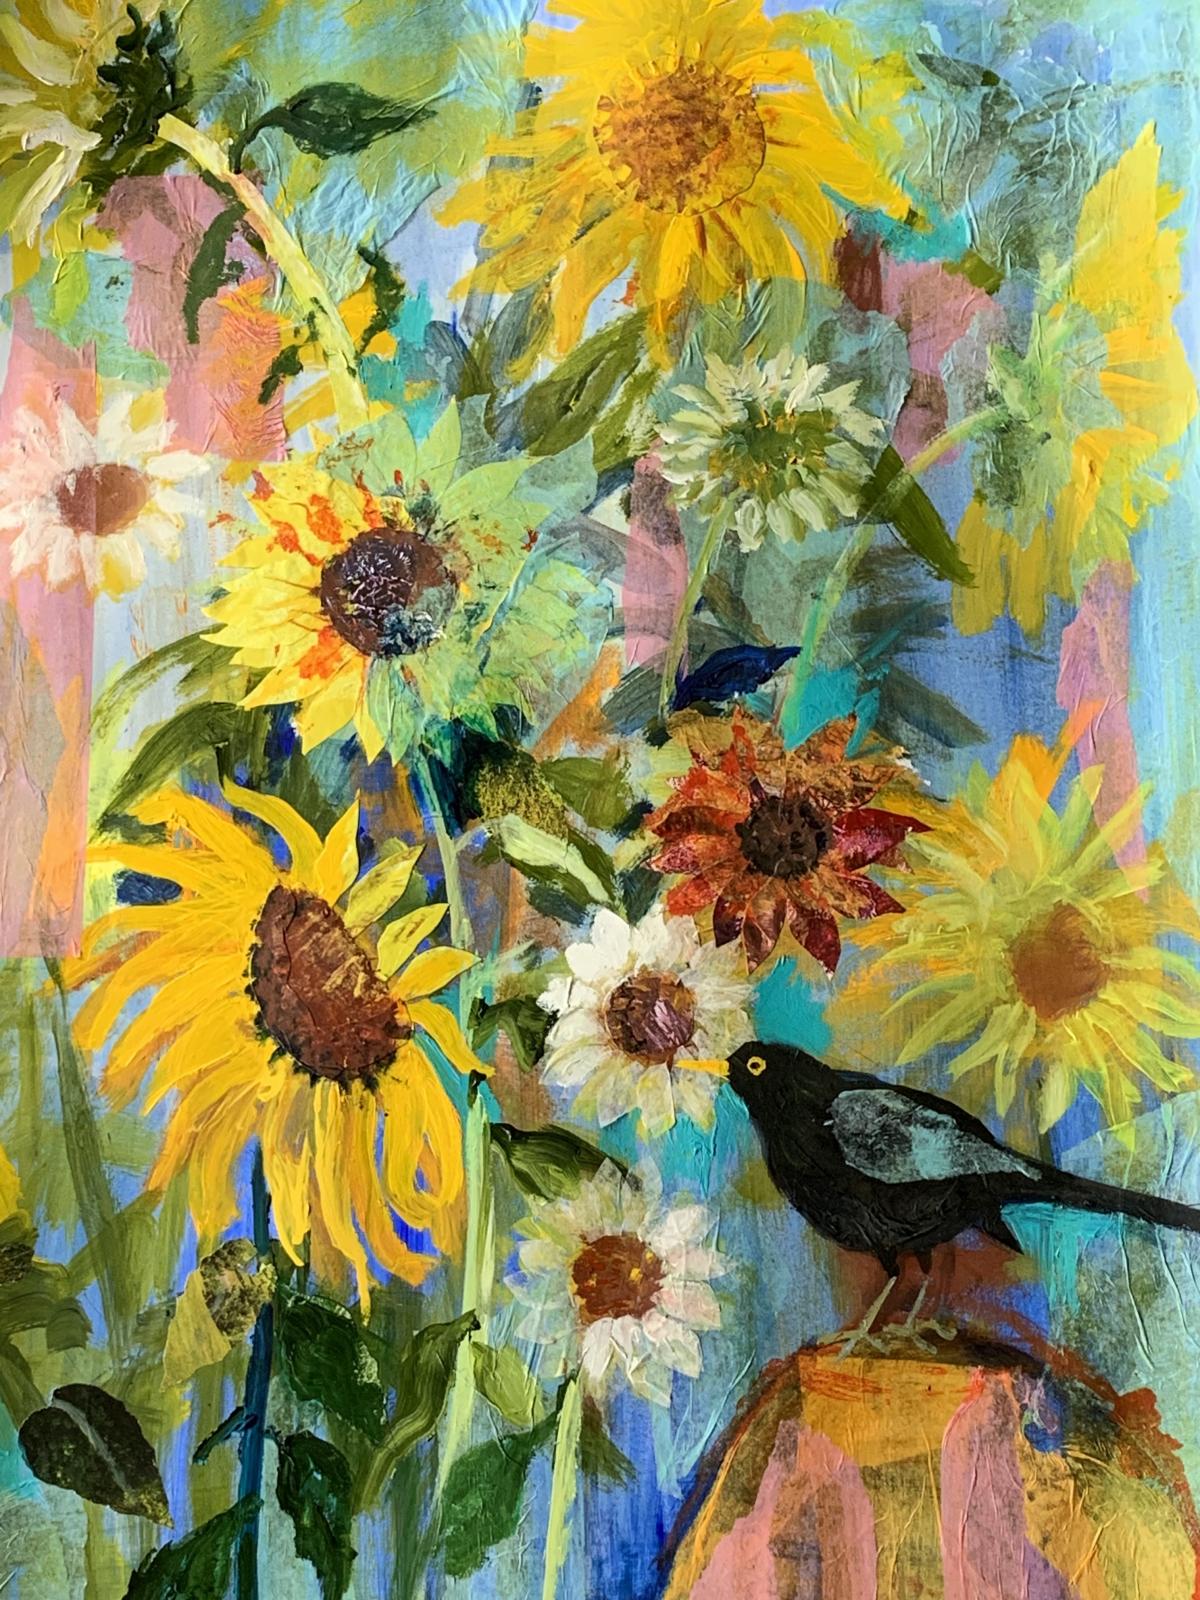 Blackbird and Sunflowers
